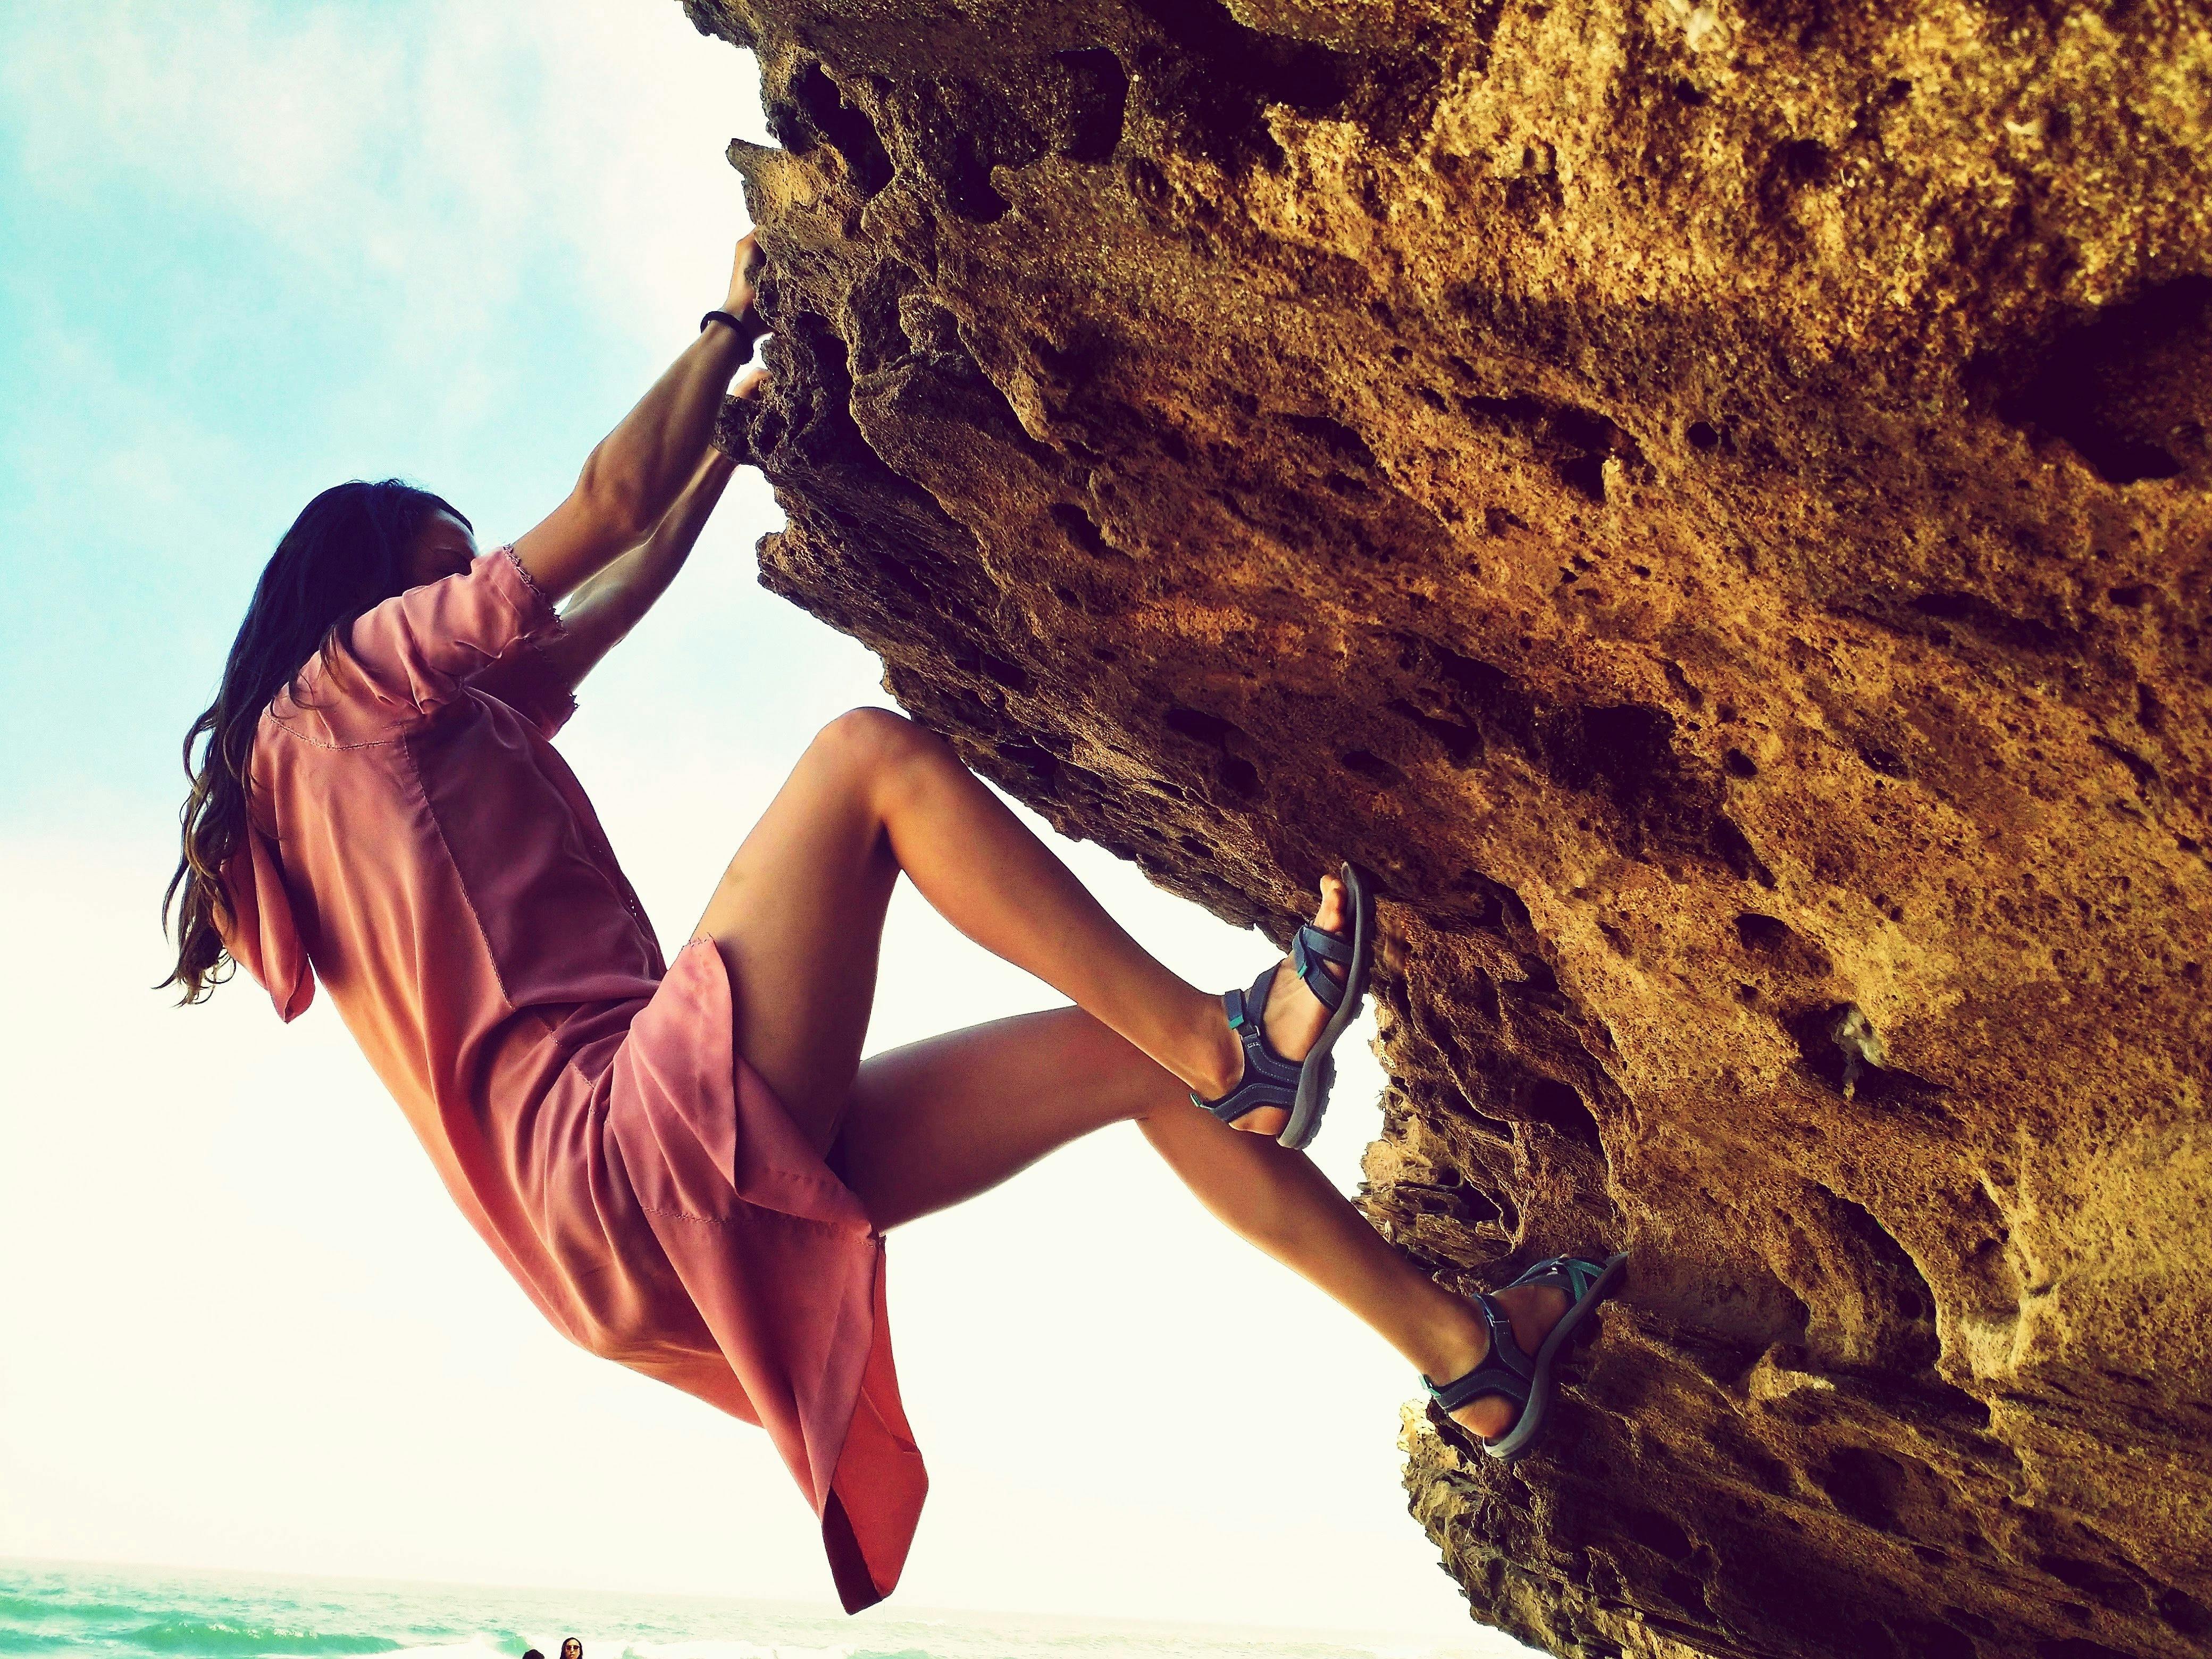 Free stock photo of ocean climber rockclimbing rock woman climbing